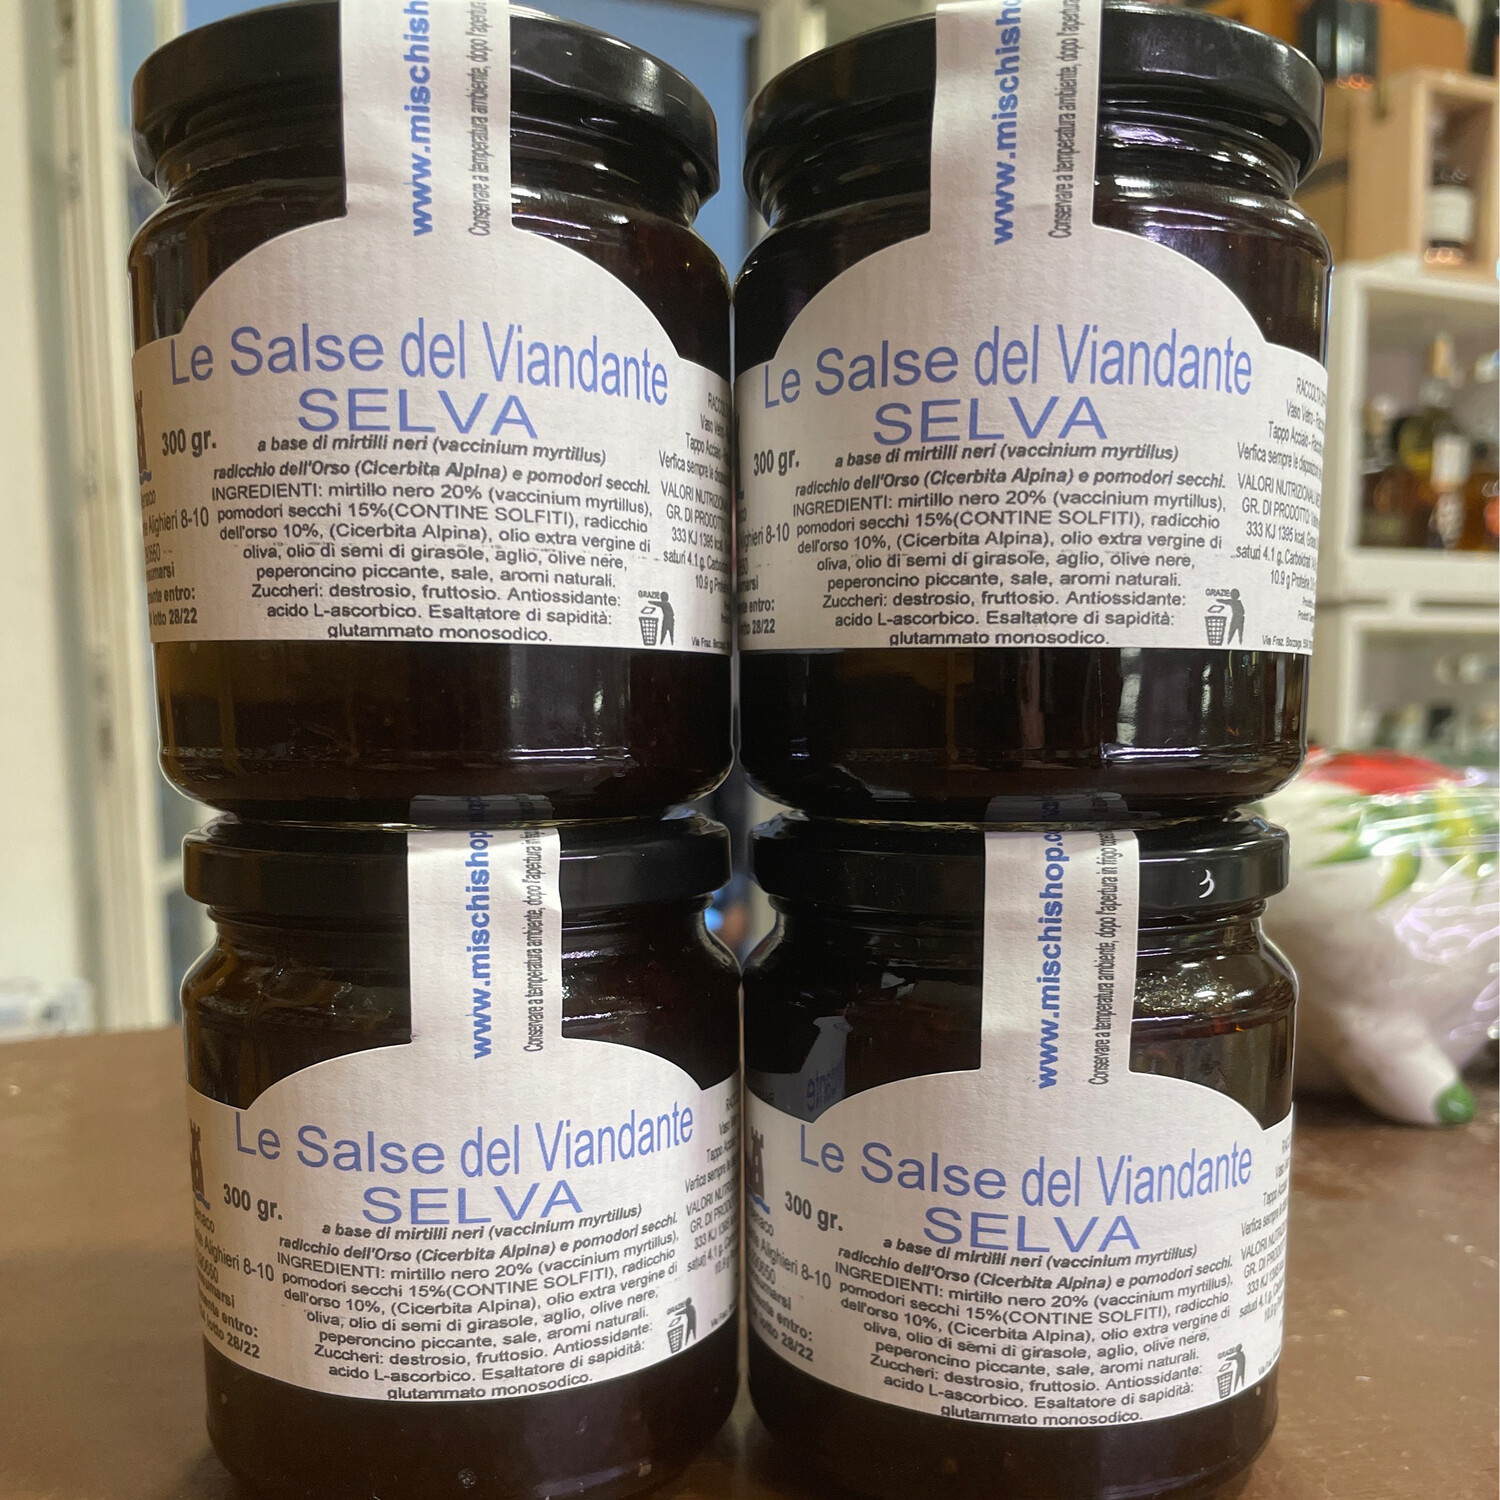 4 jars Salse del Viandante "Selva" 300 gr